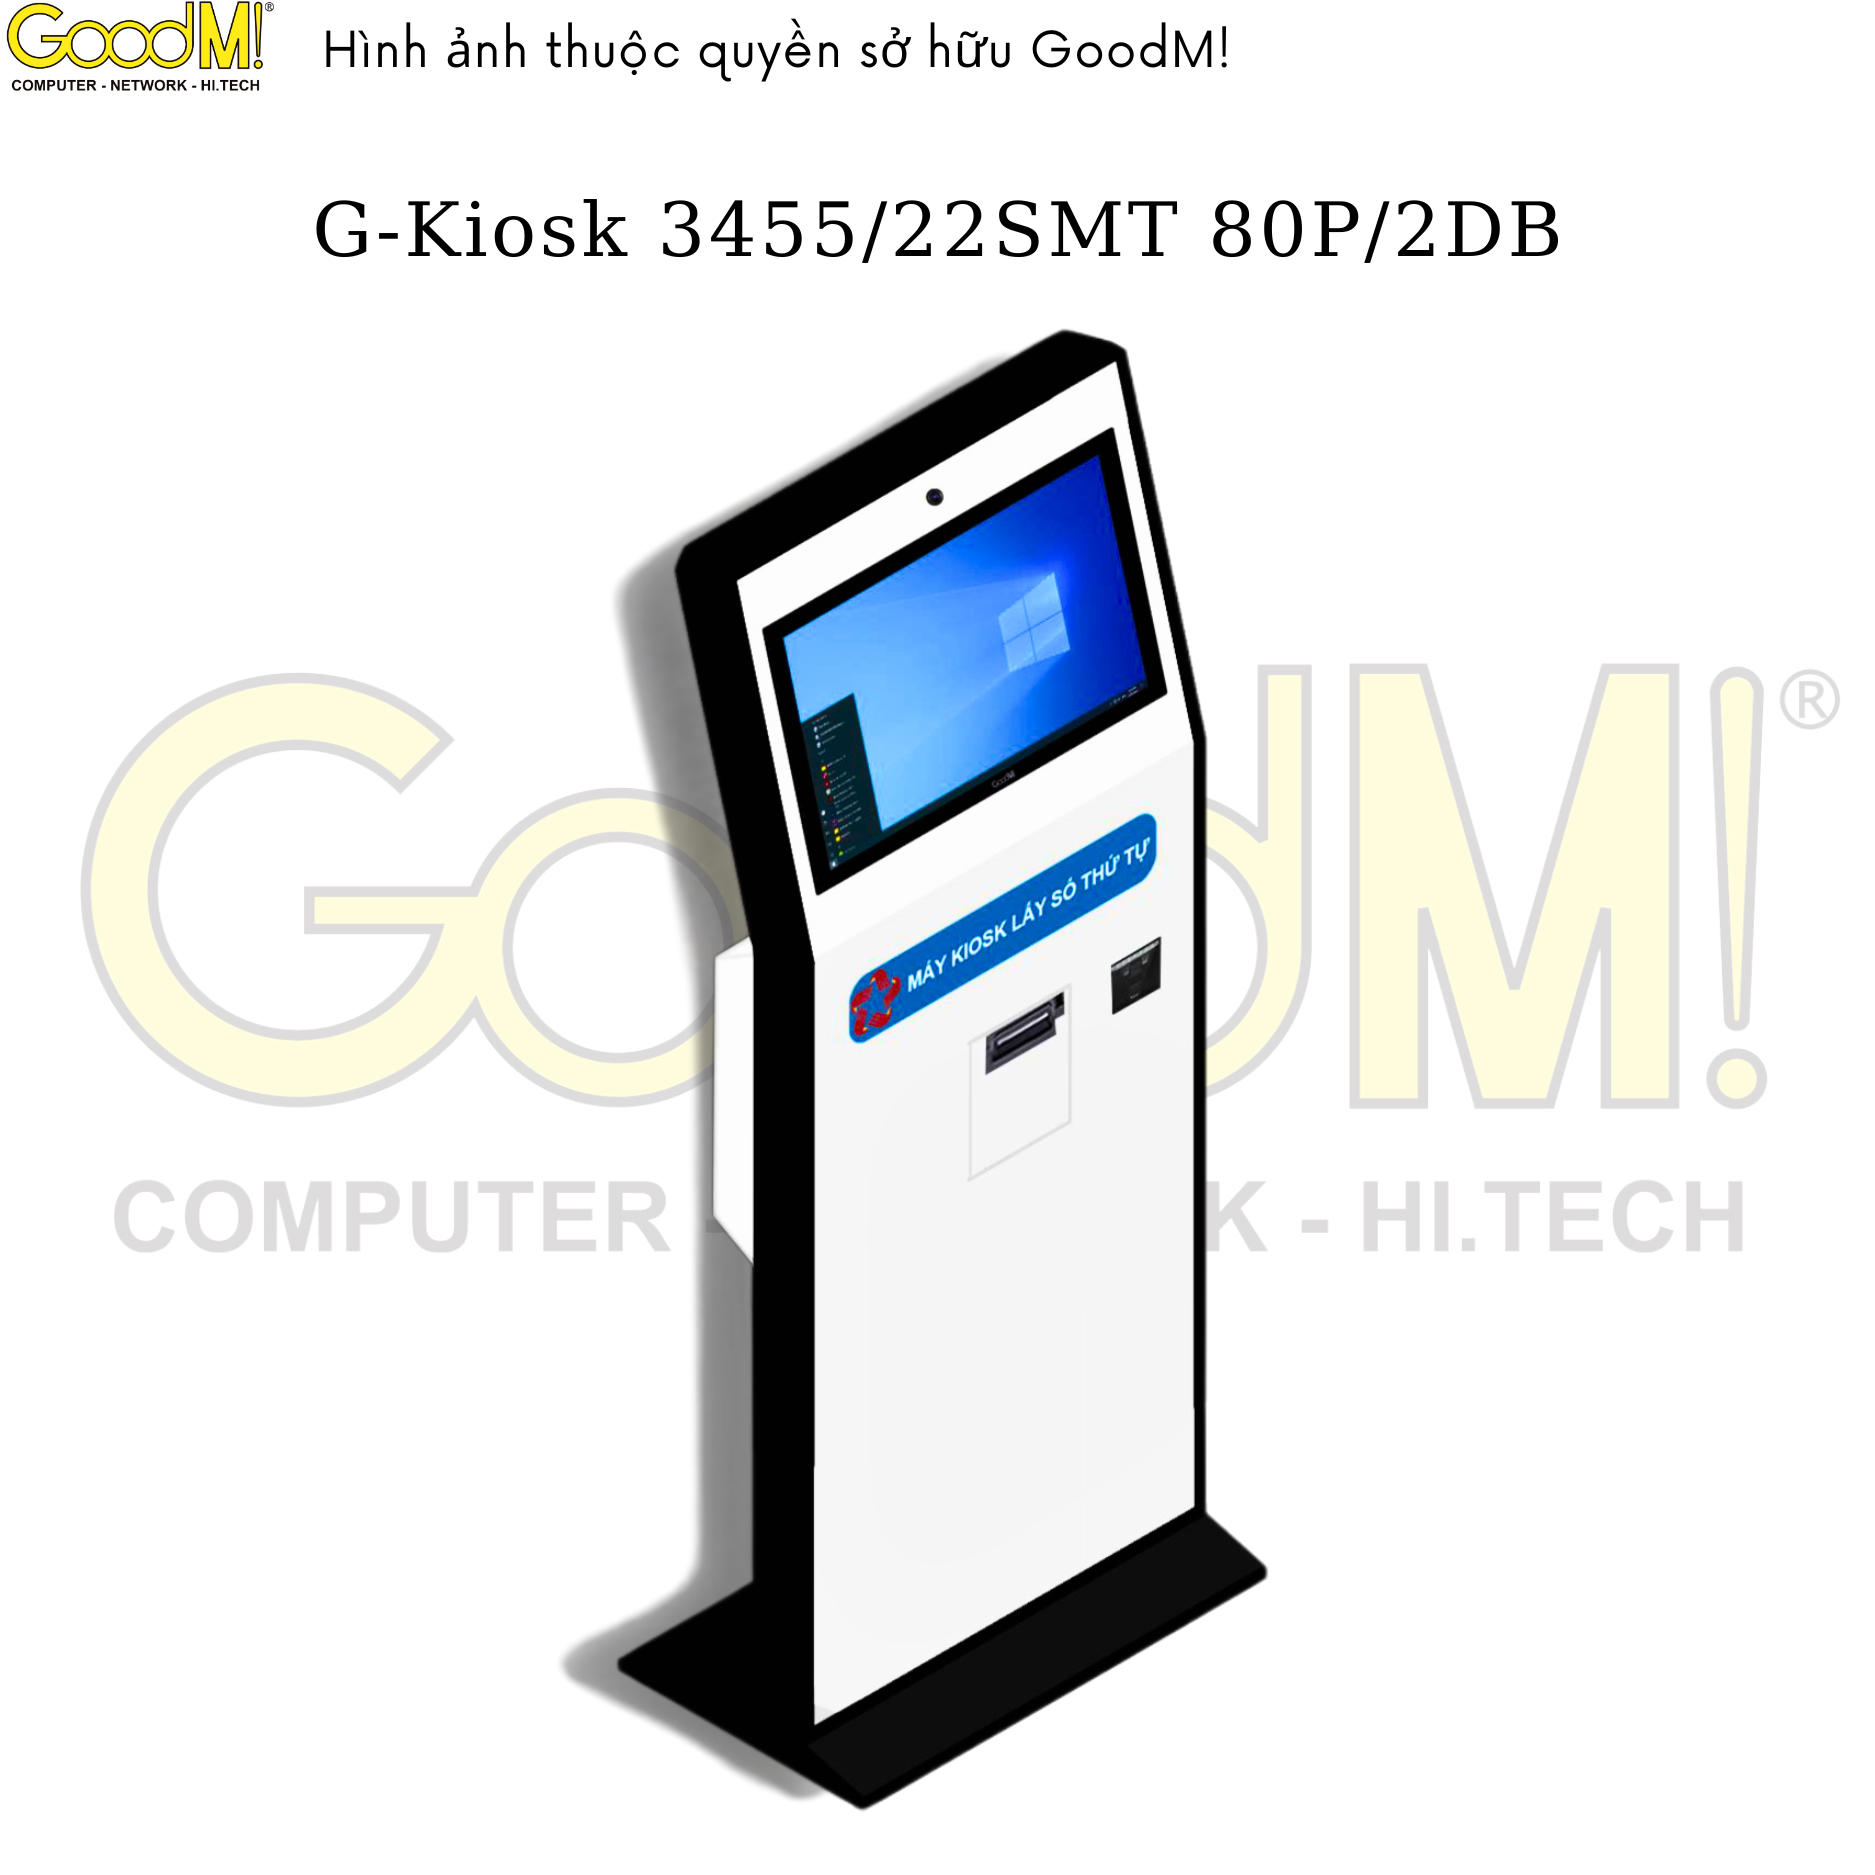  Kiosk Thông Tin G-KIOSK3455/22SMT 80P/2DB 